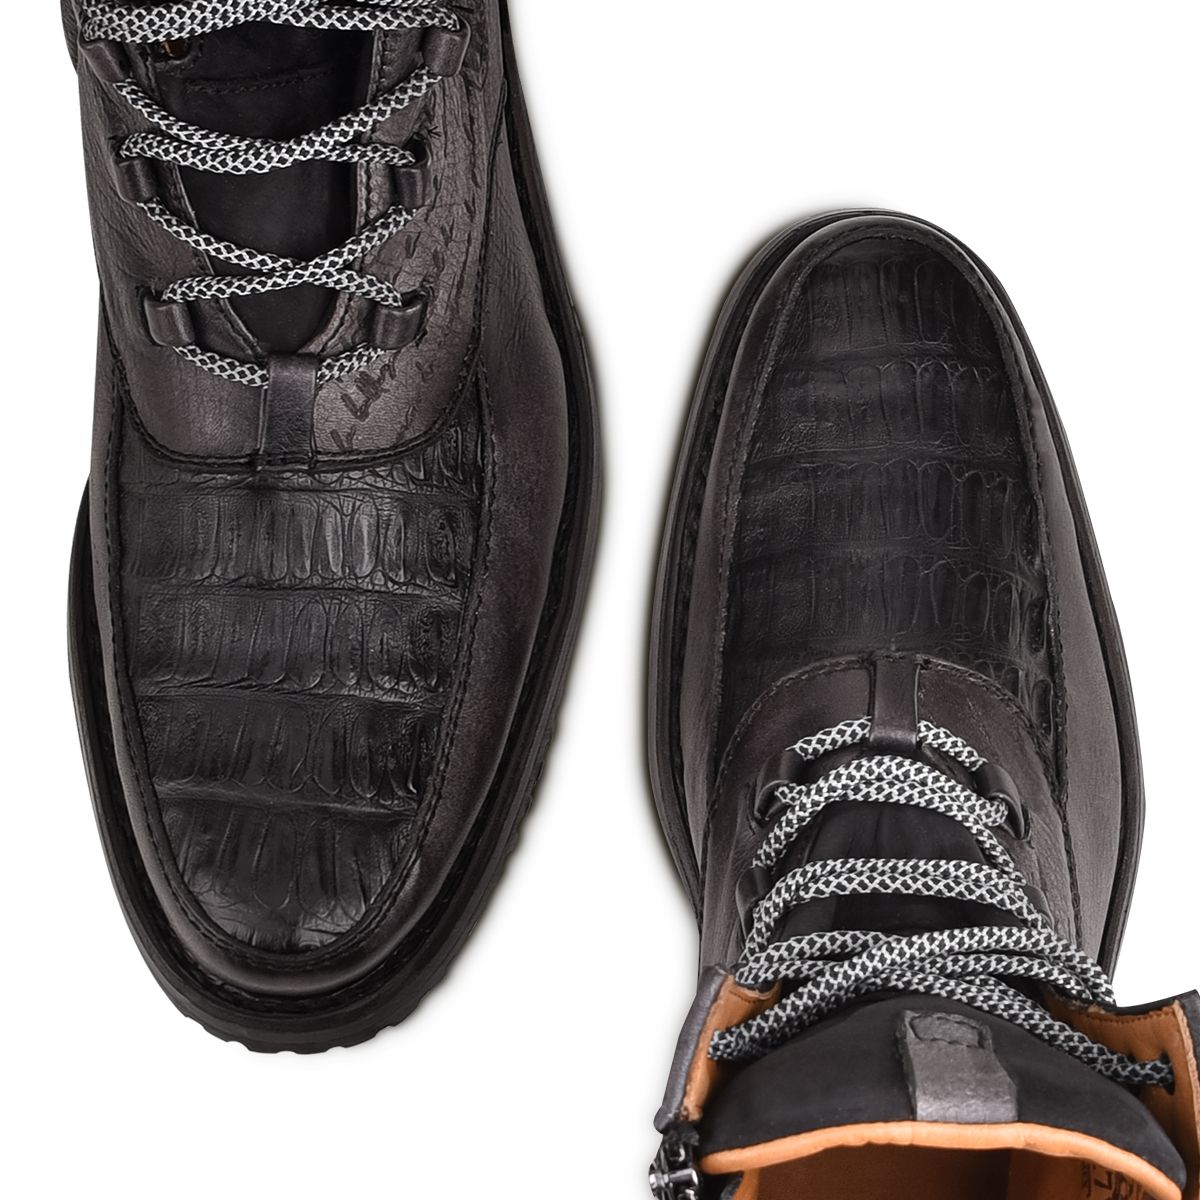 4D09FY - Cuadra black casual vintage fashion fuscus ankle booties for men.-Kuet.us